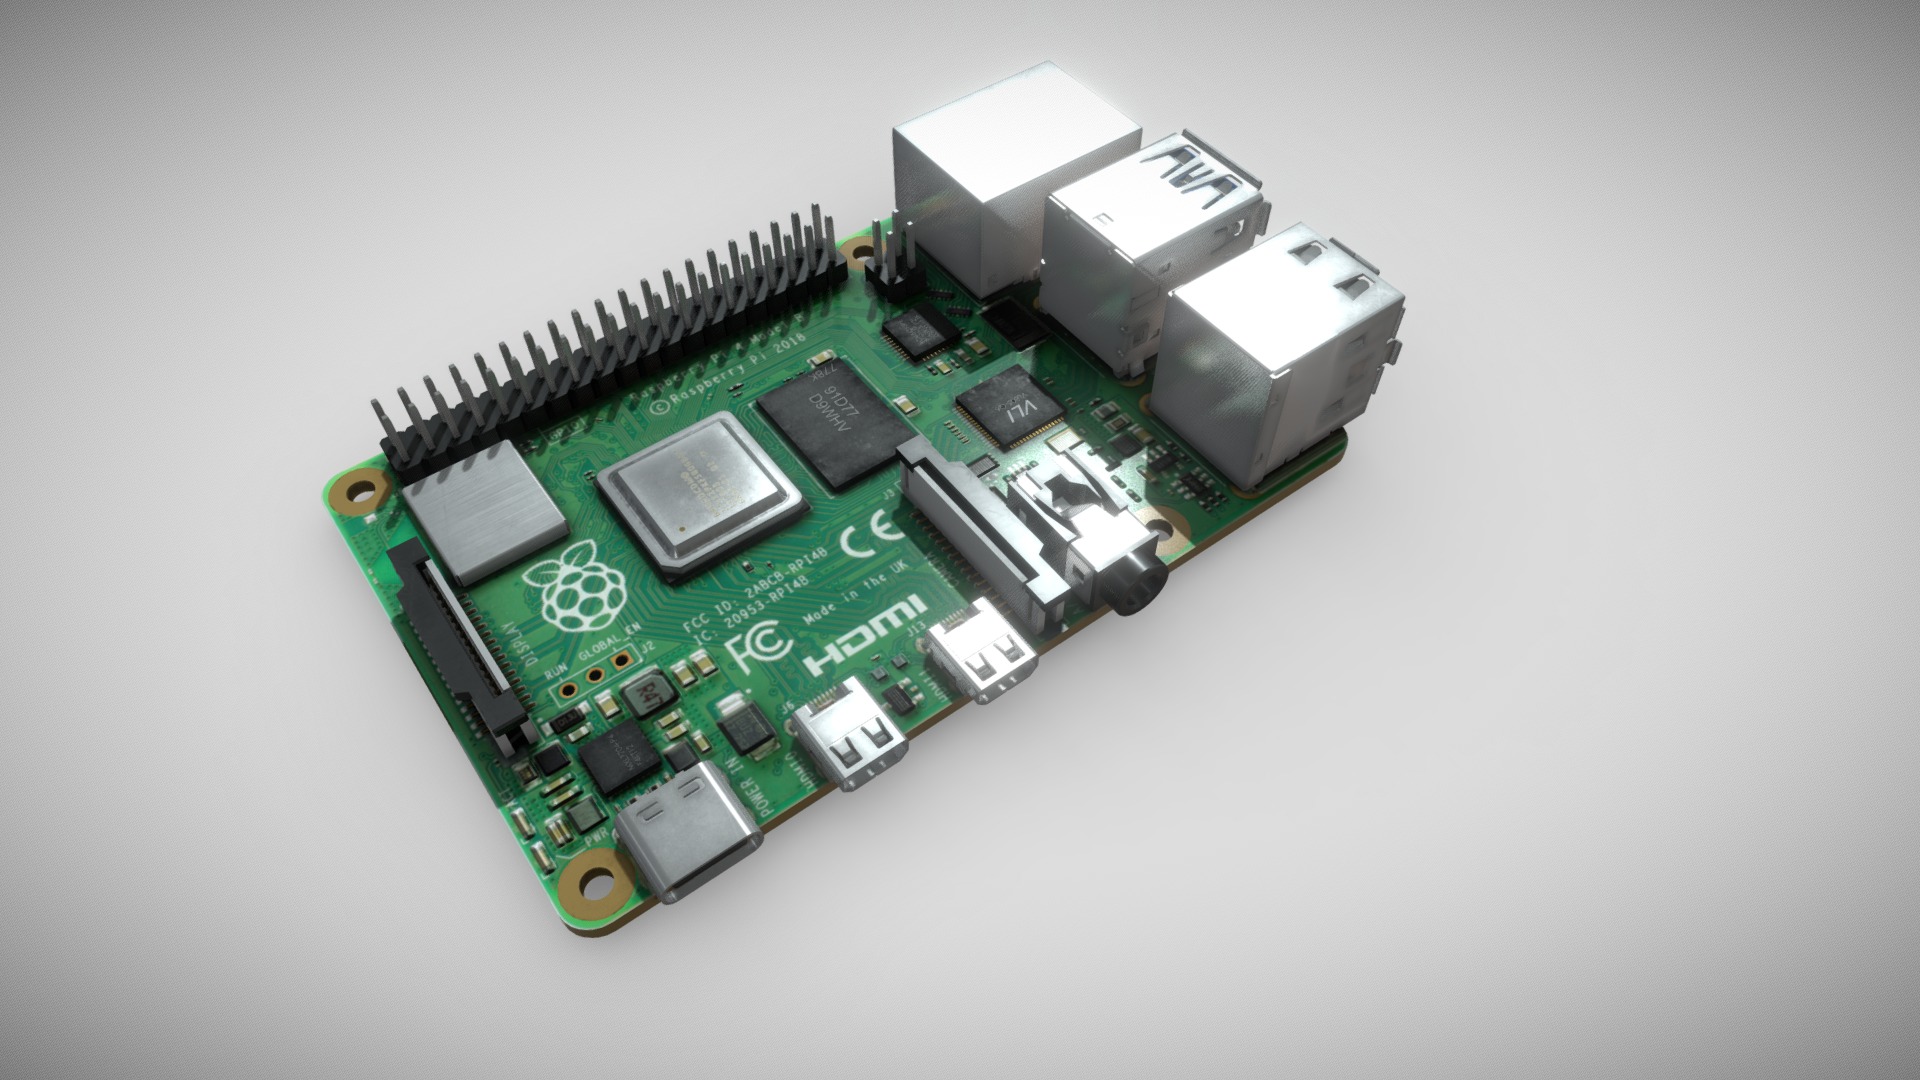 3D model Raspberry Pi 4 Model B - This is a 3D model of the Raspberry Pi 4 Model B. The 3D model is about a green circuit board.